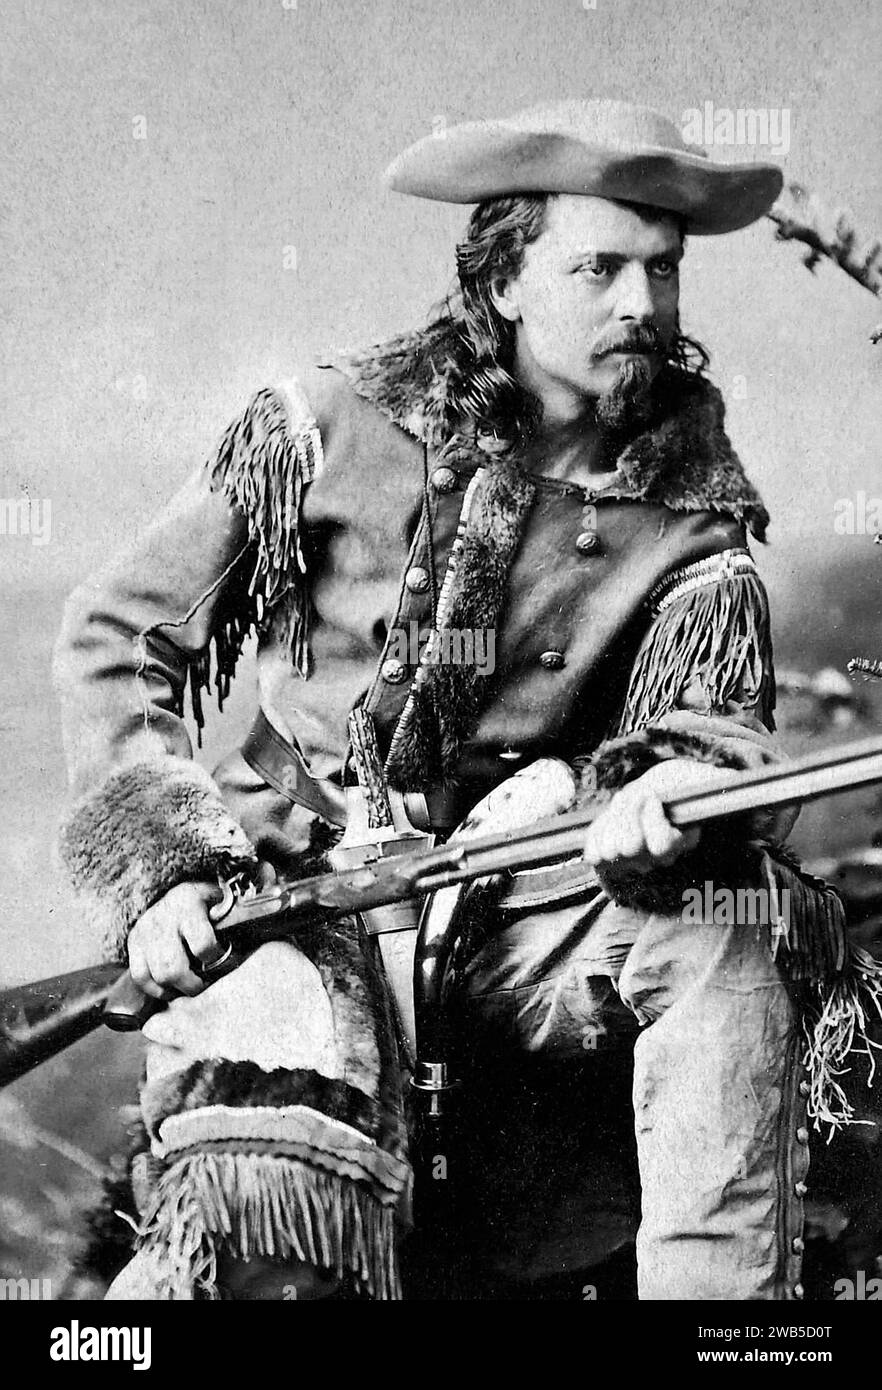 Buffalo Bill, William Cody, William Frederick Cody (1846 – 1917), known as Buffalo Bill, American soldier, bison hunter, and showman. Stock Photo